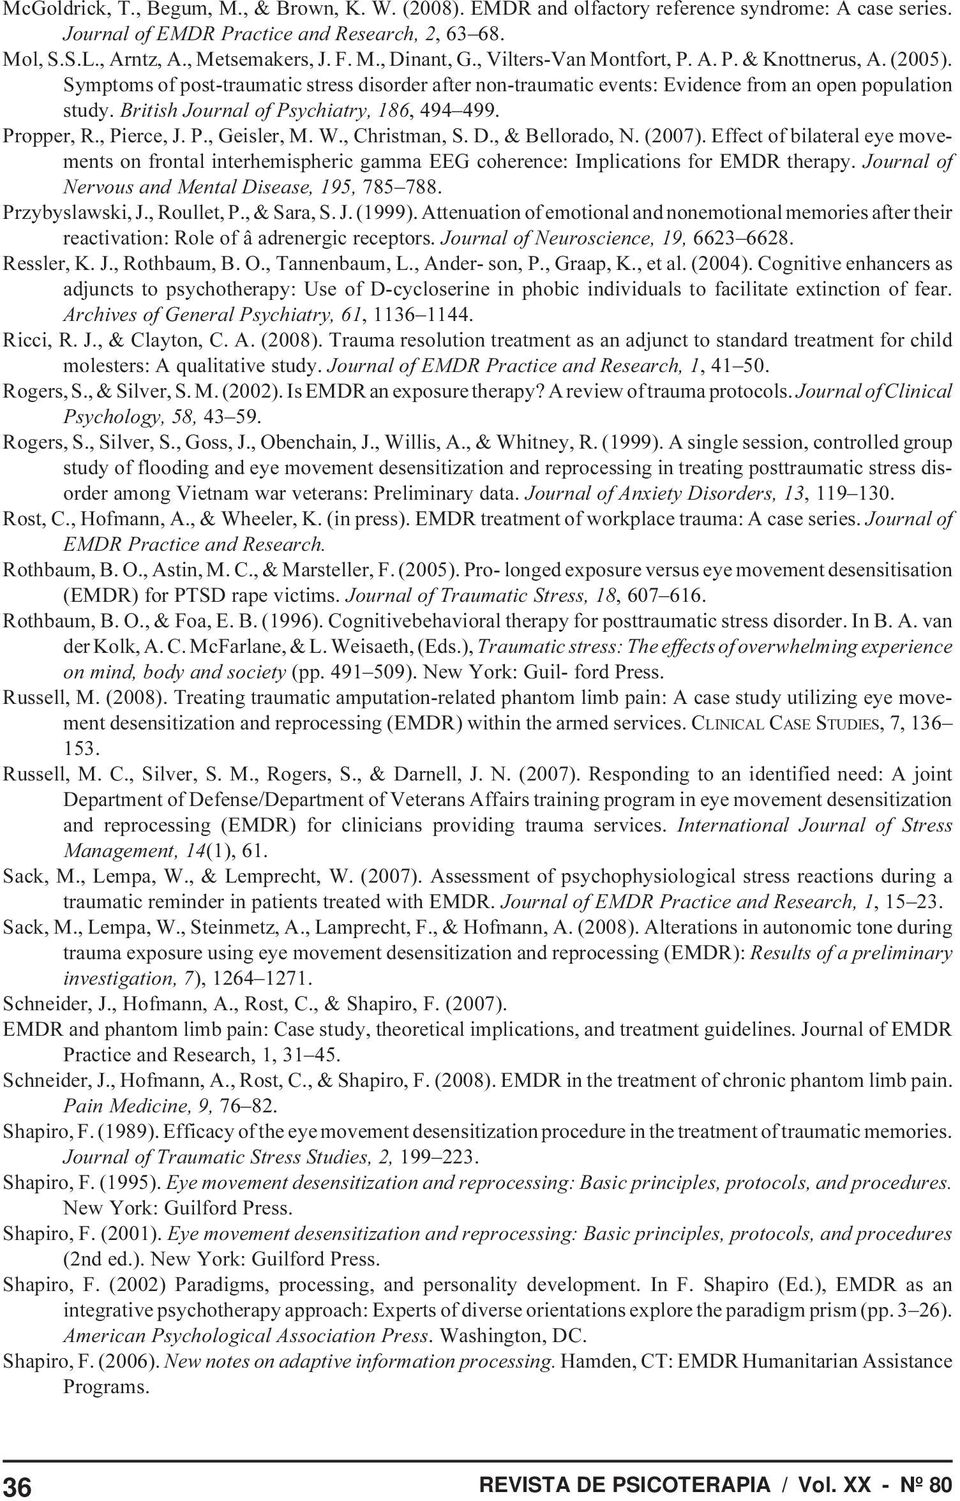 British Journal of Psychiatry, 186, 494 499. Propper, R., Pierce, J. P., Geisler, M. W., Christman, S. D., & Bellorado, N. (2007).